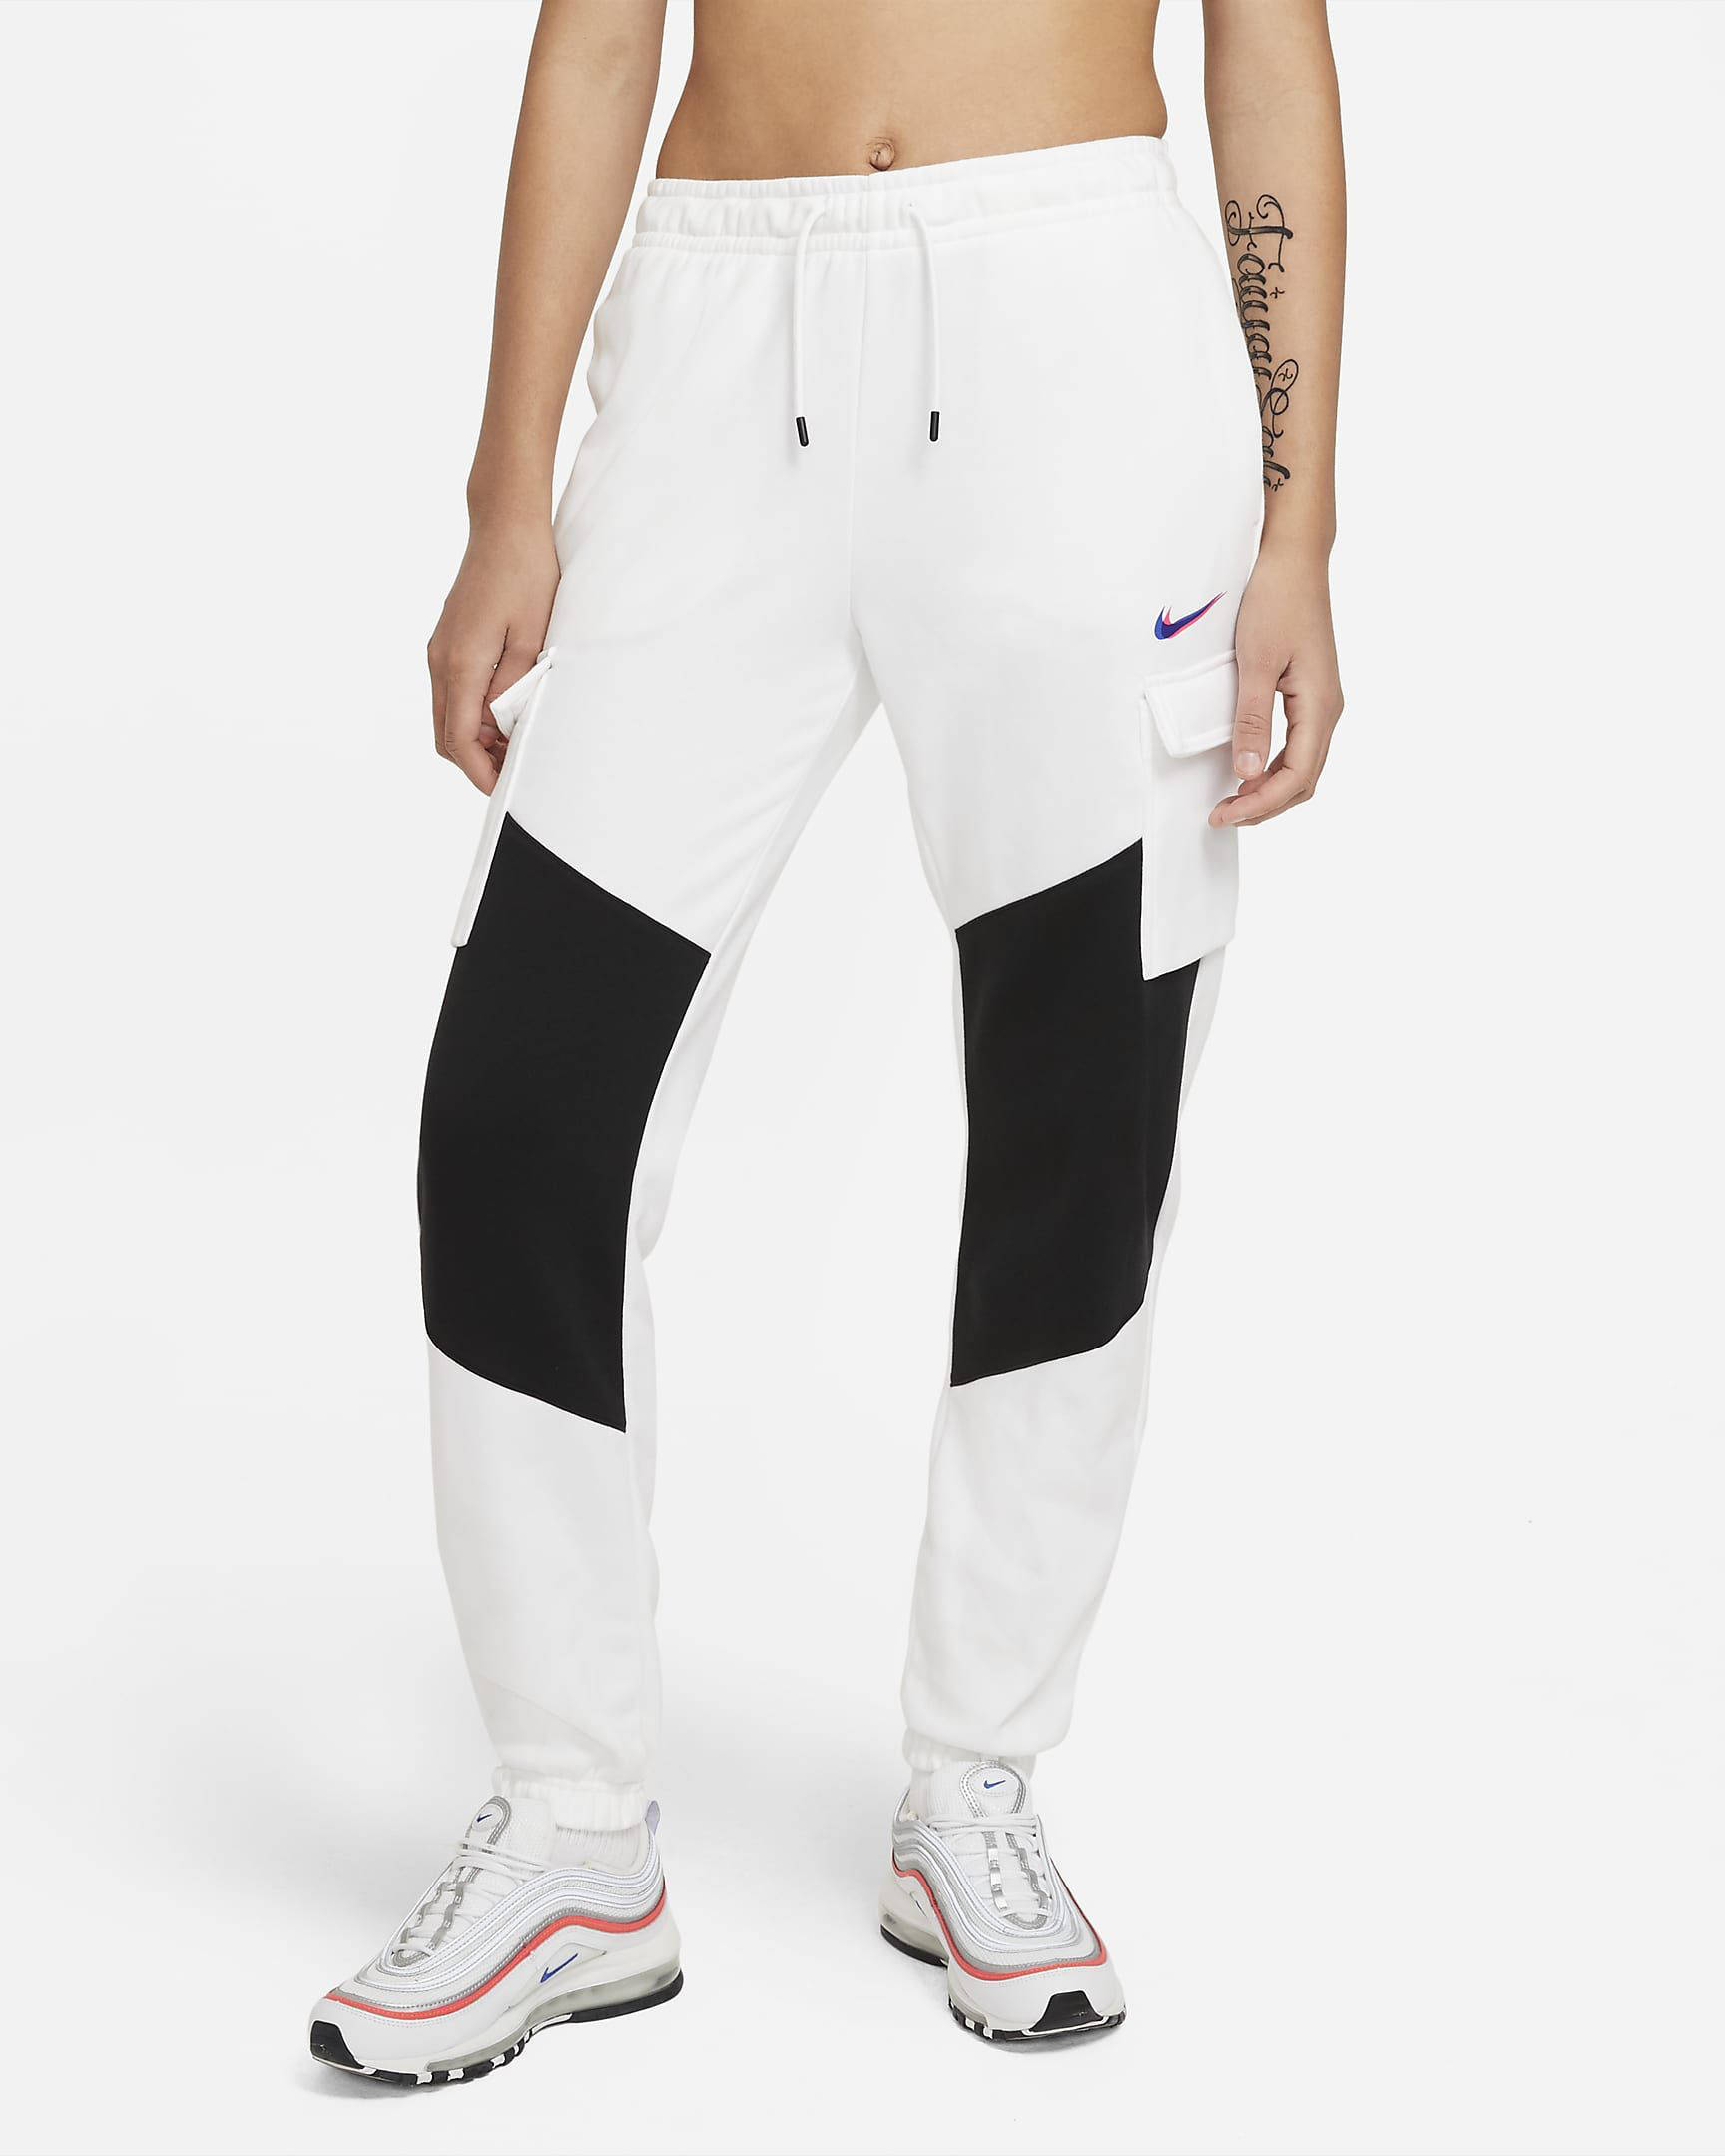 Nike Medium Bliss Studio Dance High Waisted Pants Trousers Wide Leg Capri  S12 | eBay